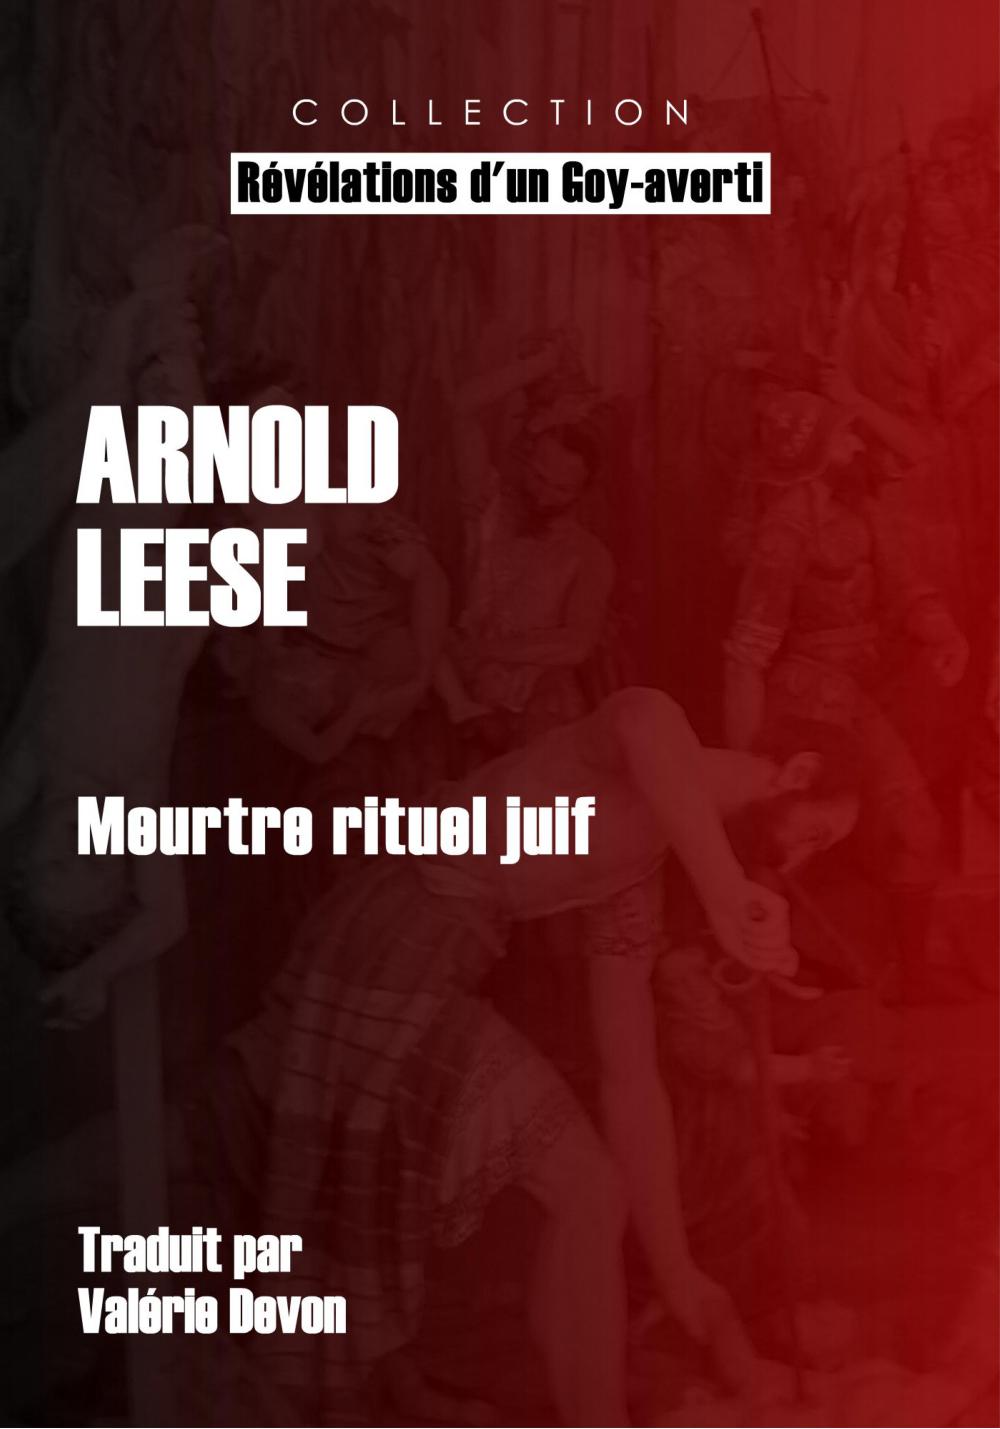 Leese Arnold - Meurtre rituel juif - couv 1